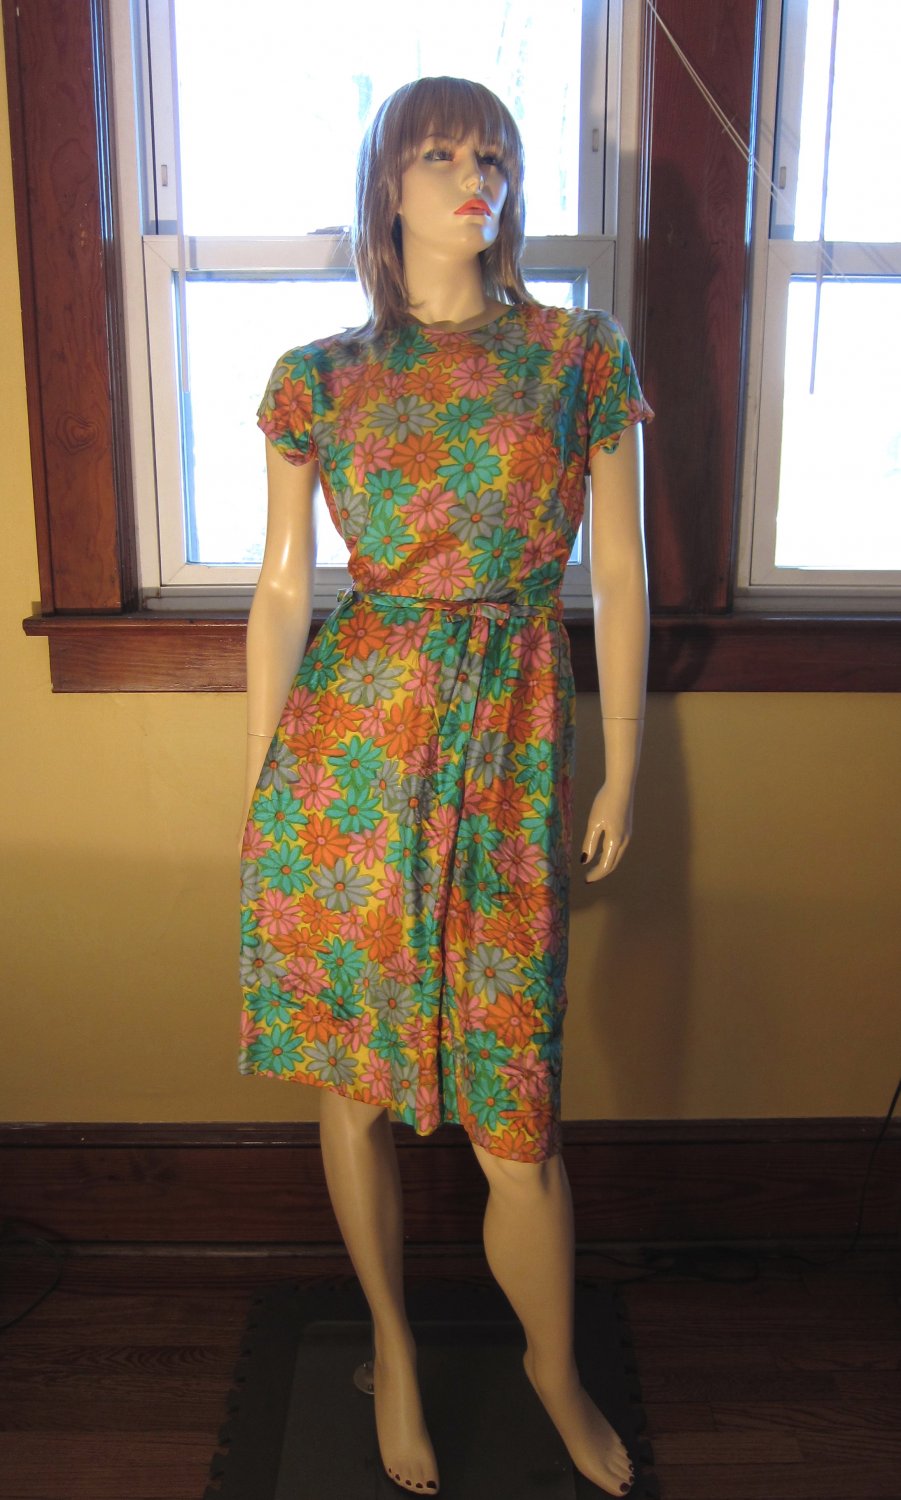 Vintage 60s Mod Flower Power Groovy Girl Floral Print Dress M.